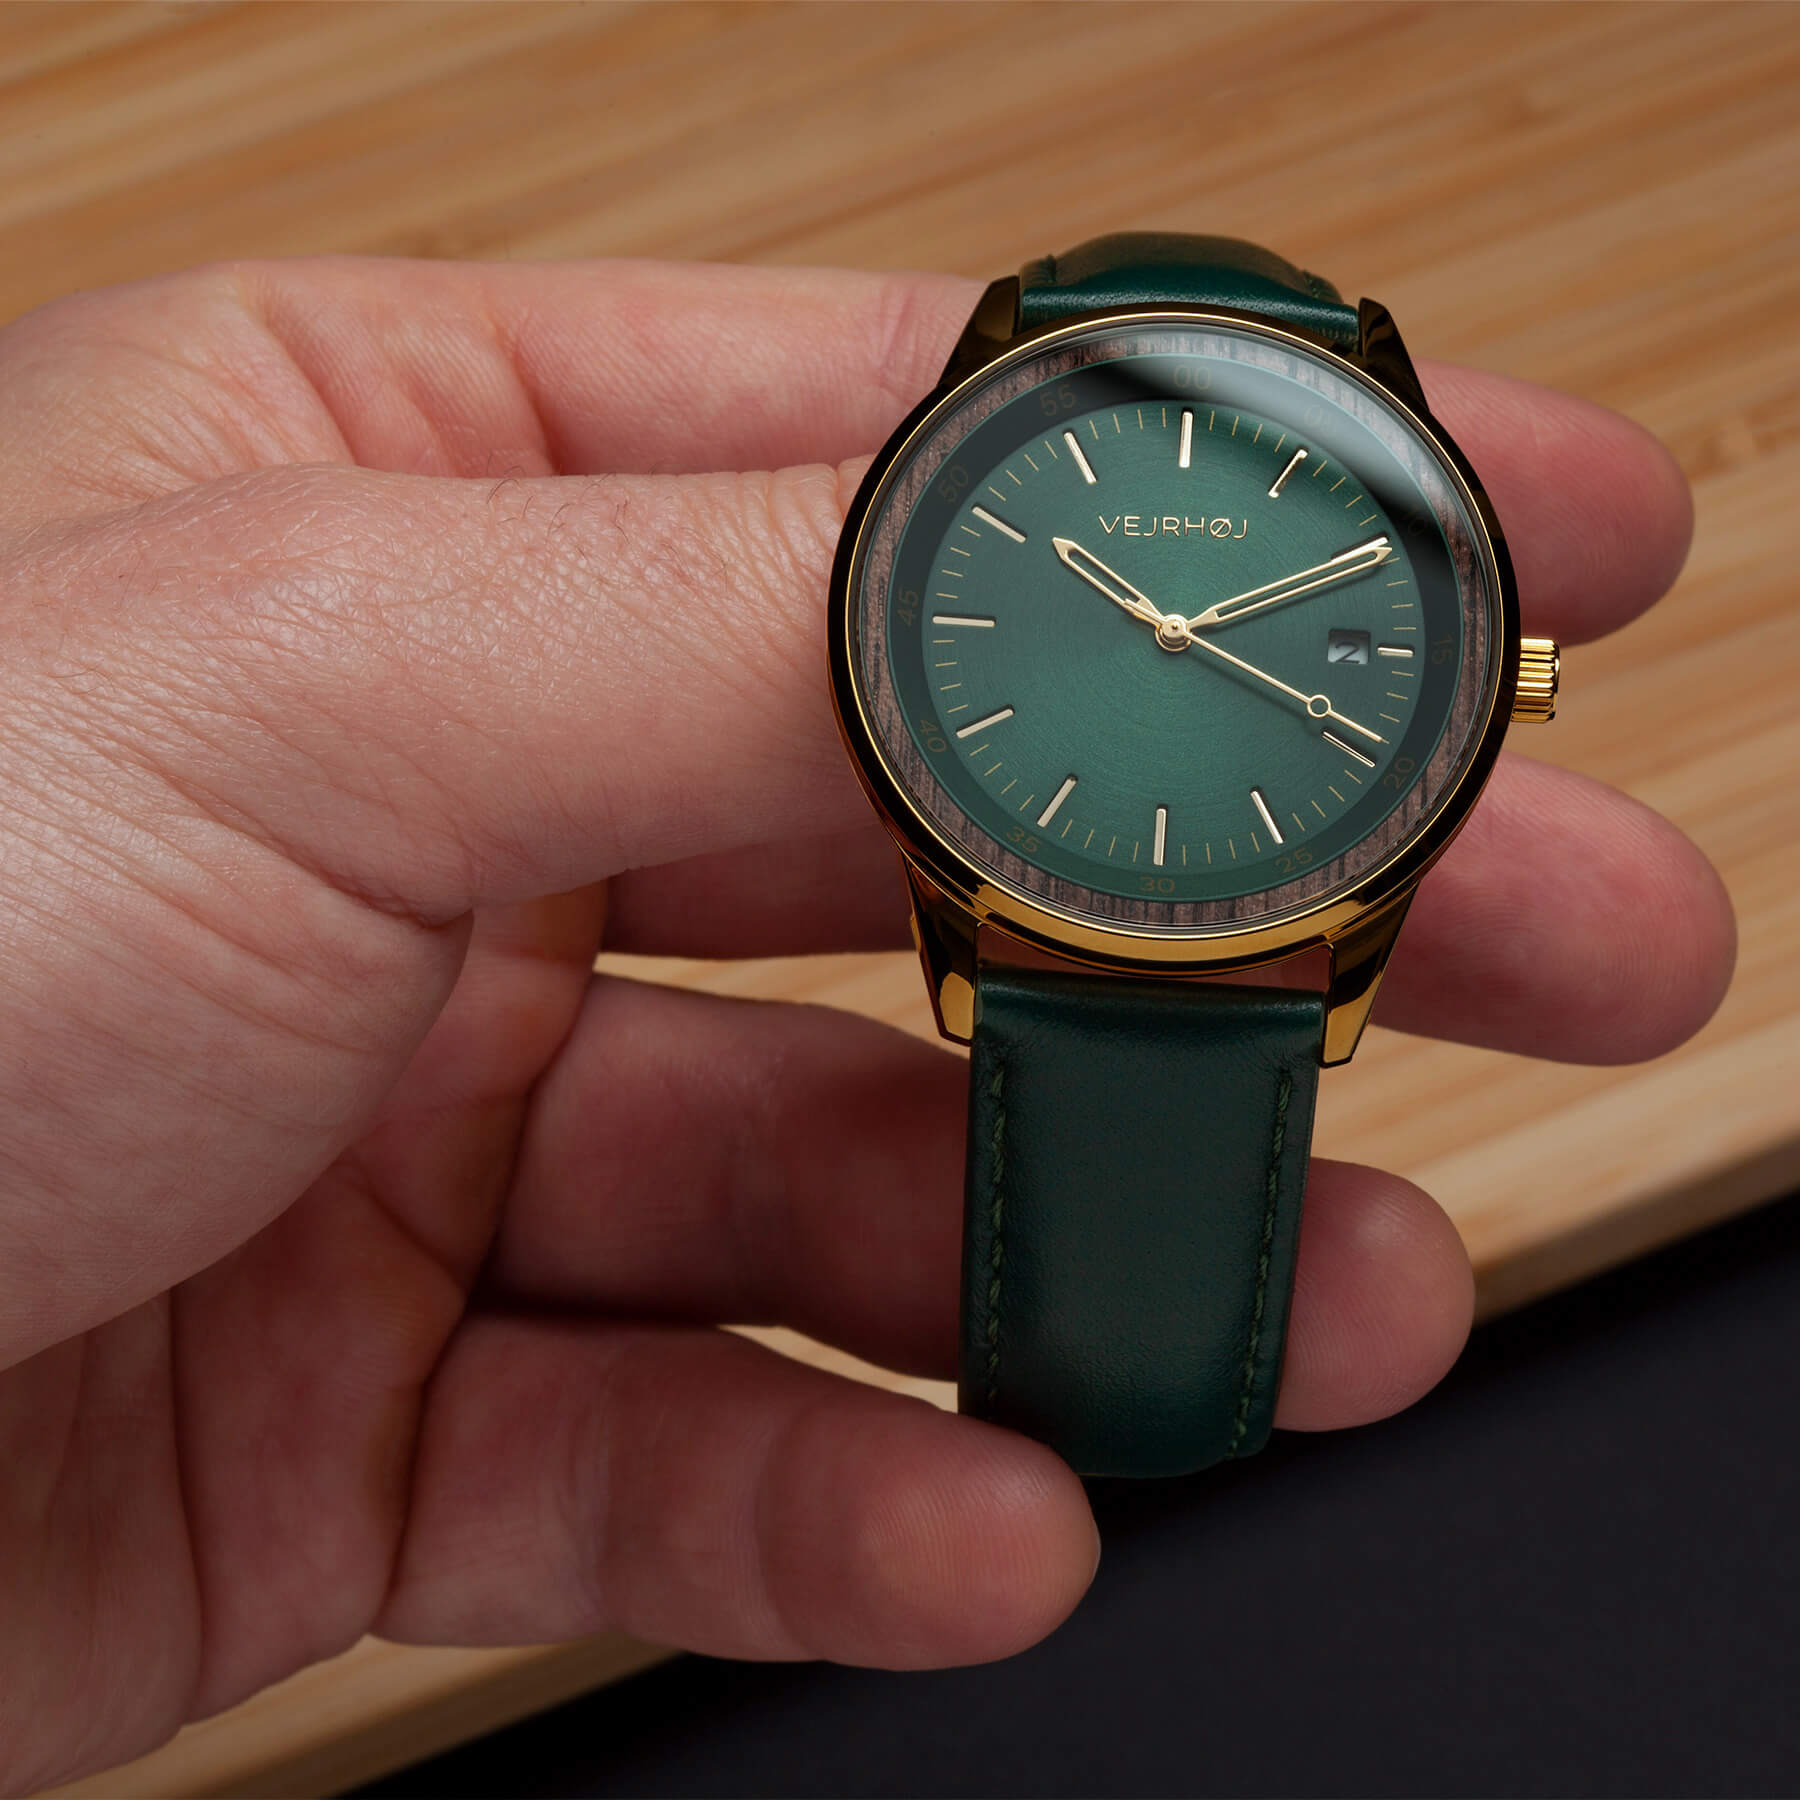 beautiful shot of the green automatic wrist watch model from the danish brand VEJRHØJ